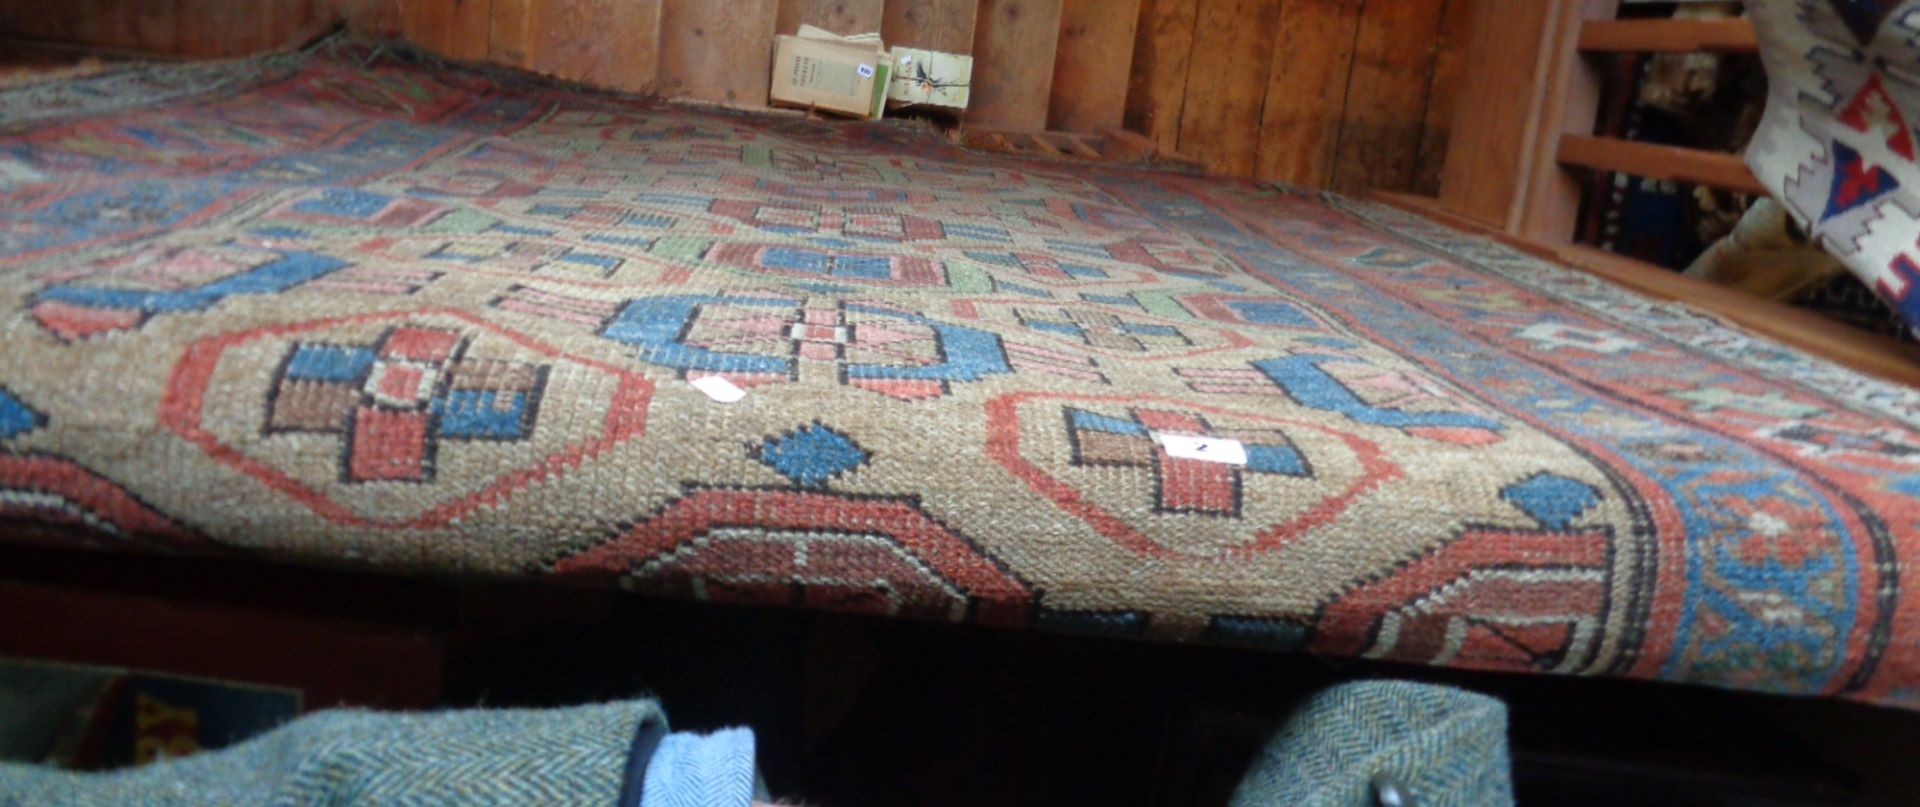 Antique Caucasian rug, approx 52" x 100" - Image 3 of 5